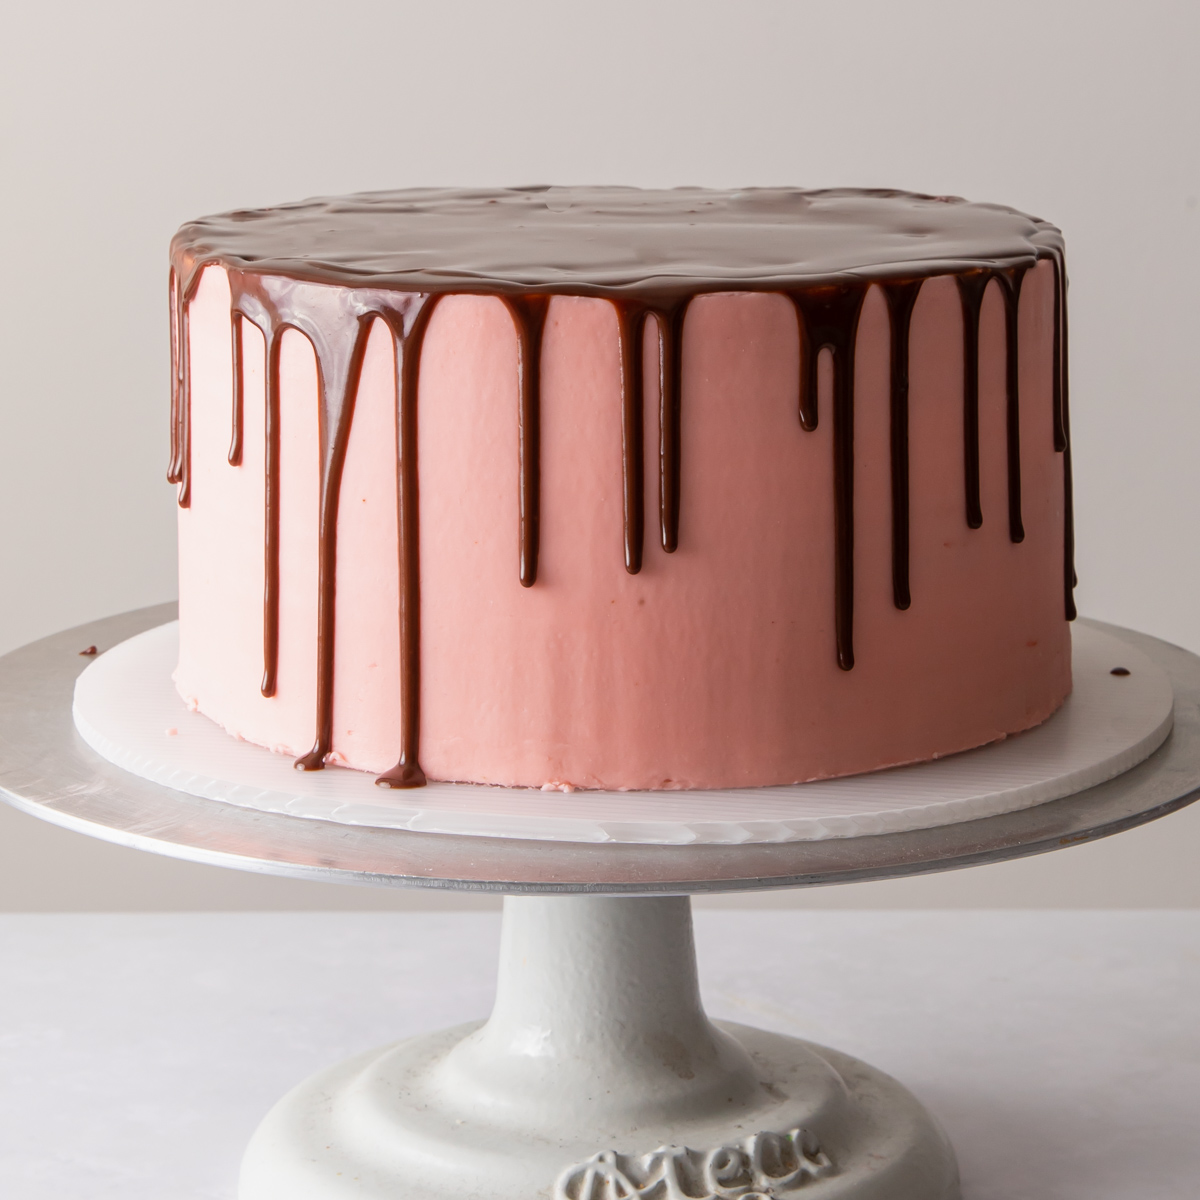 How to Make a Chocolate Drip Cake - Style Sweet